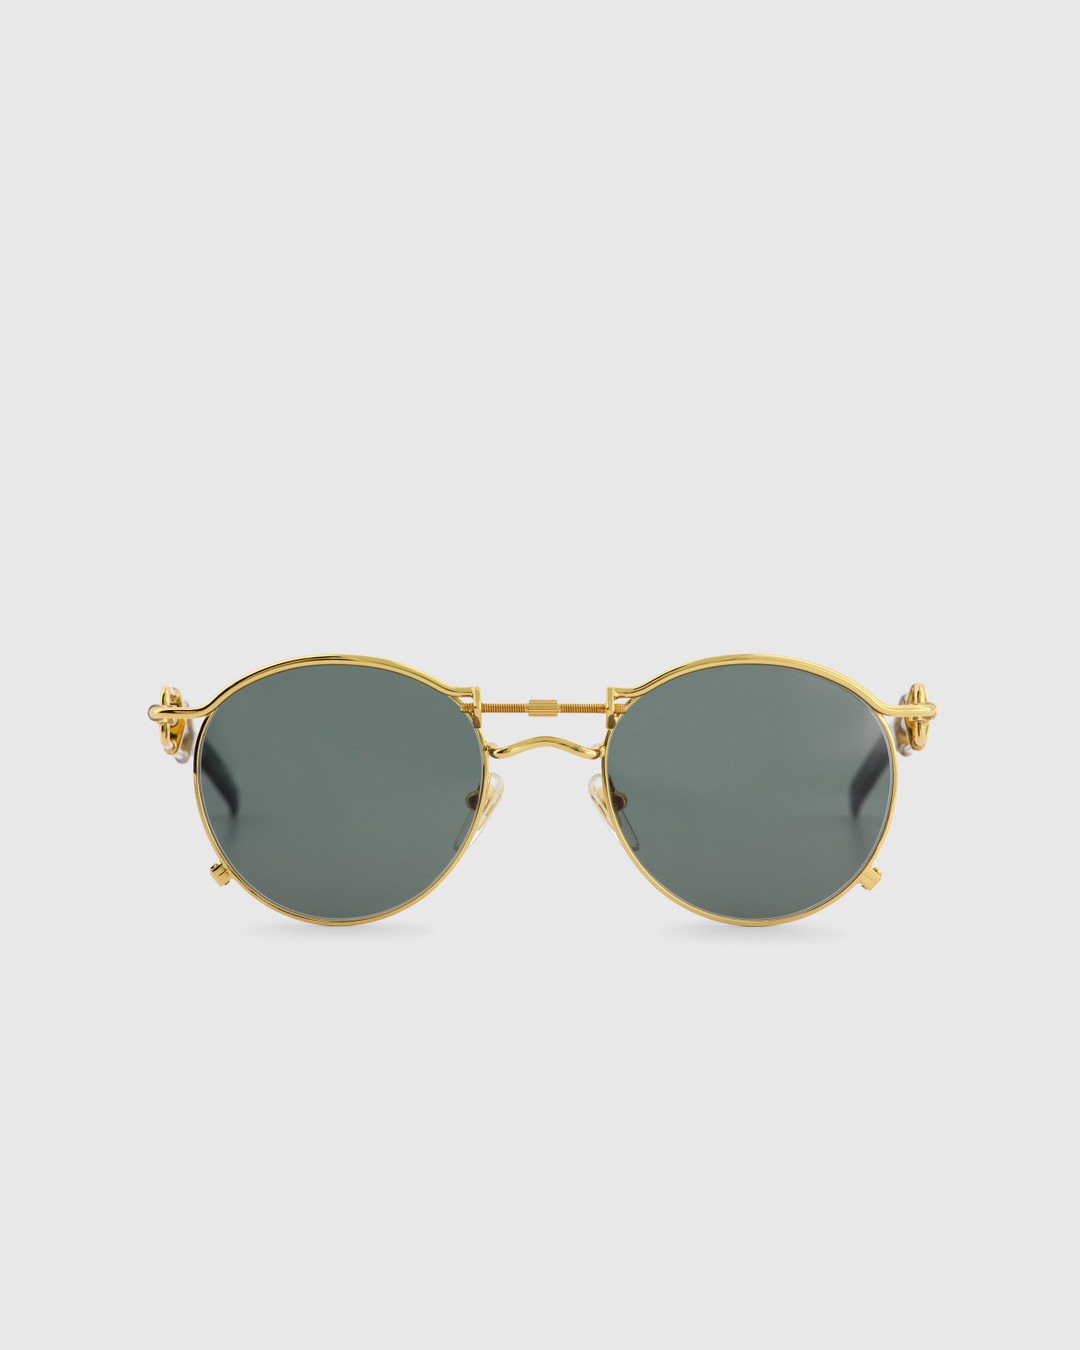 Jean Paul Gaultier x Burna Boy – 56-0174 Pas De Vis Sunglasses Yellow - Sunglasses - Yellow - Image 1